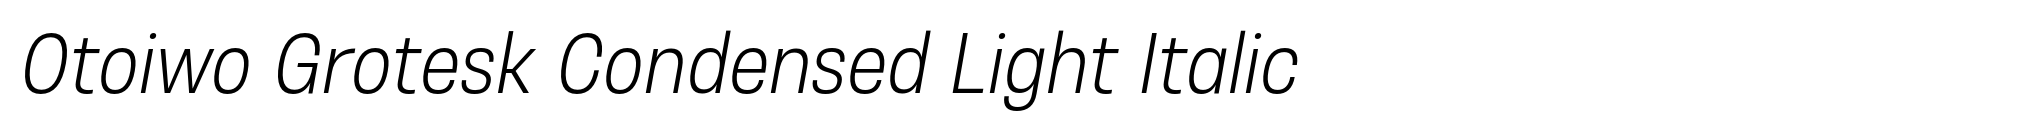 Otoiwo Grotesk Condensed Light Italic image